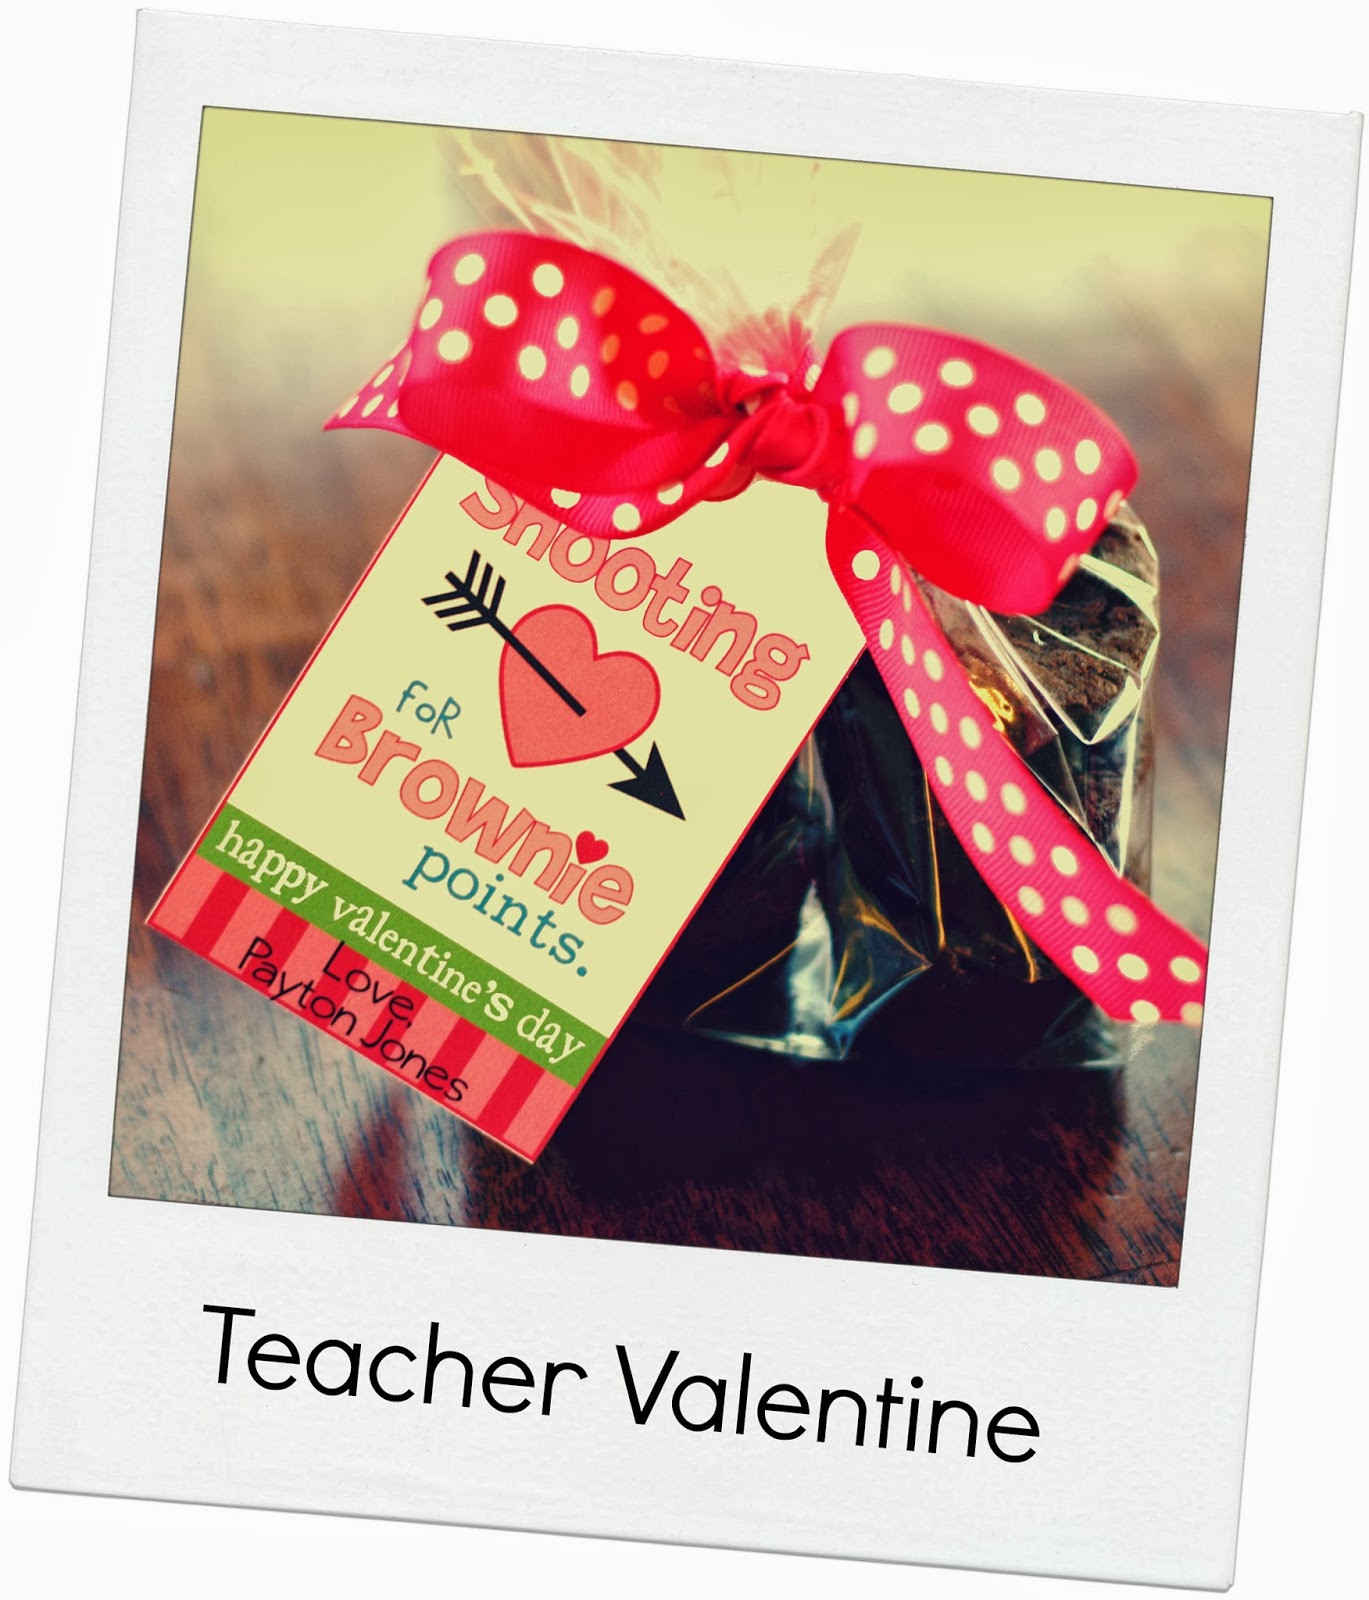 School Valentine Gift Ideas
 Keeping My Cents ¢¢¢ Homemade School Valentine s